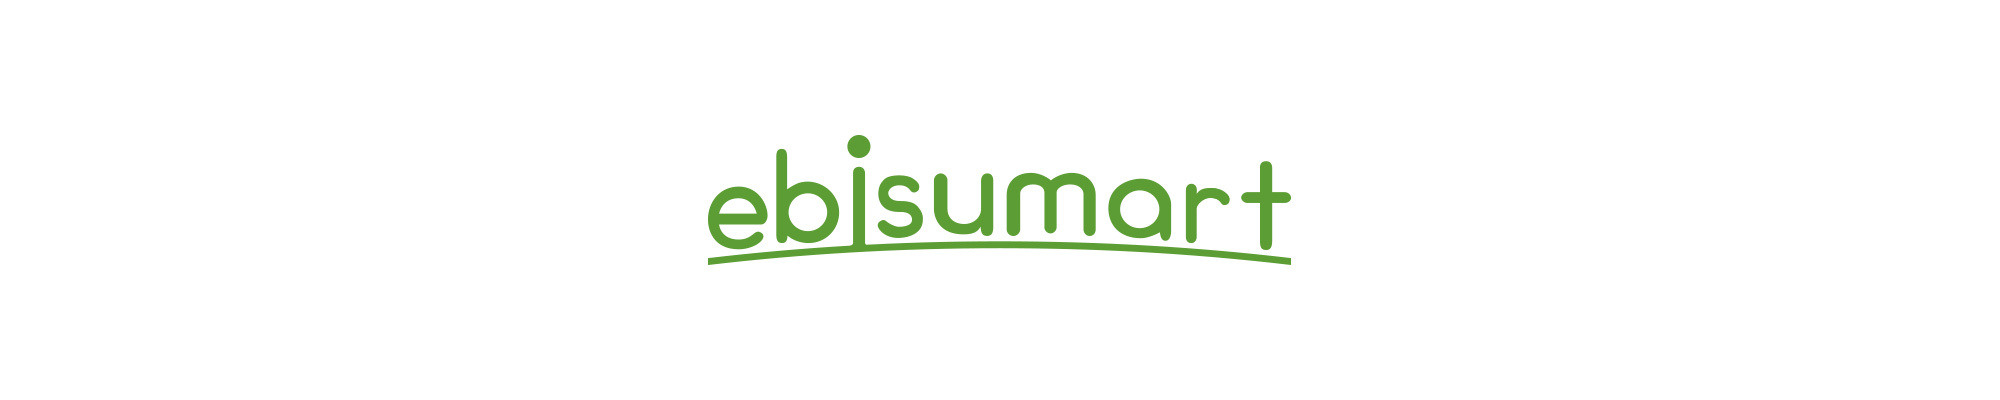 ebisumartがBIツール市場をリード※するTableau Cloudを基盤とした新サイト分析サービス「ビジュアルデータ分析オプション」をリリース